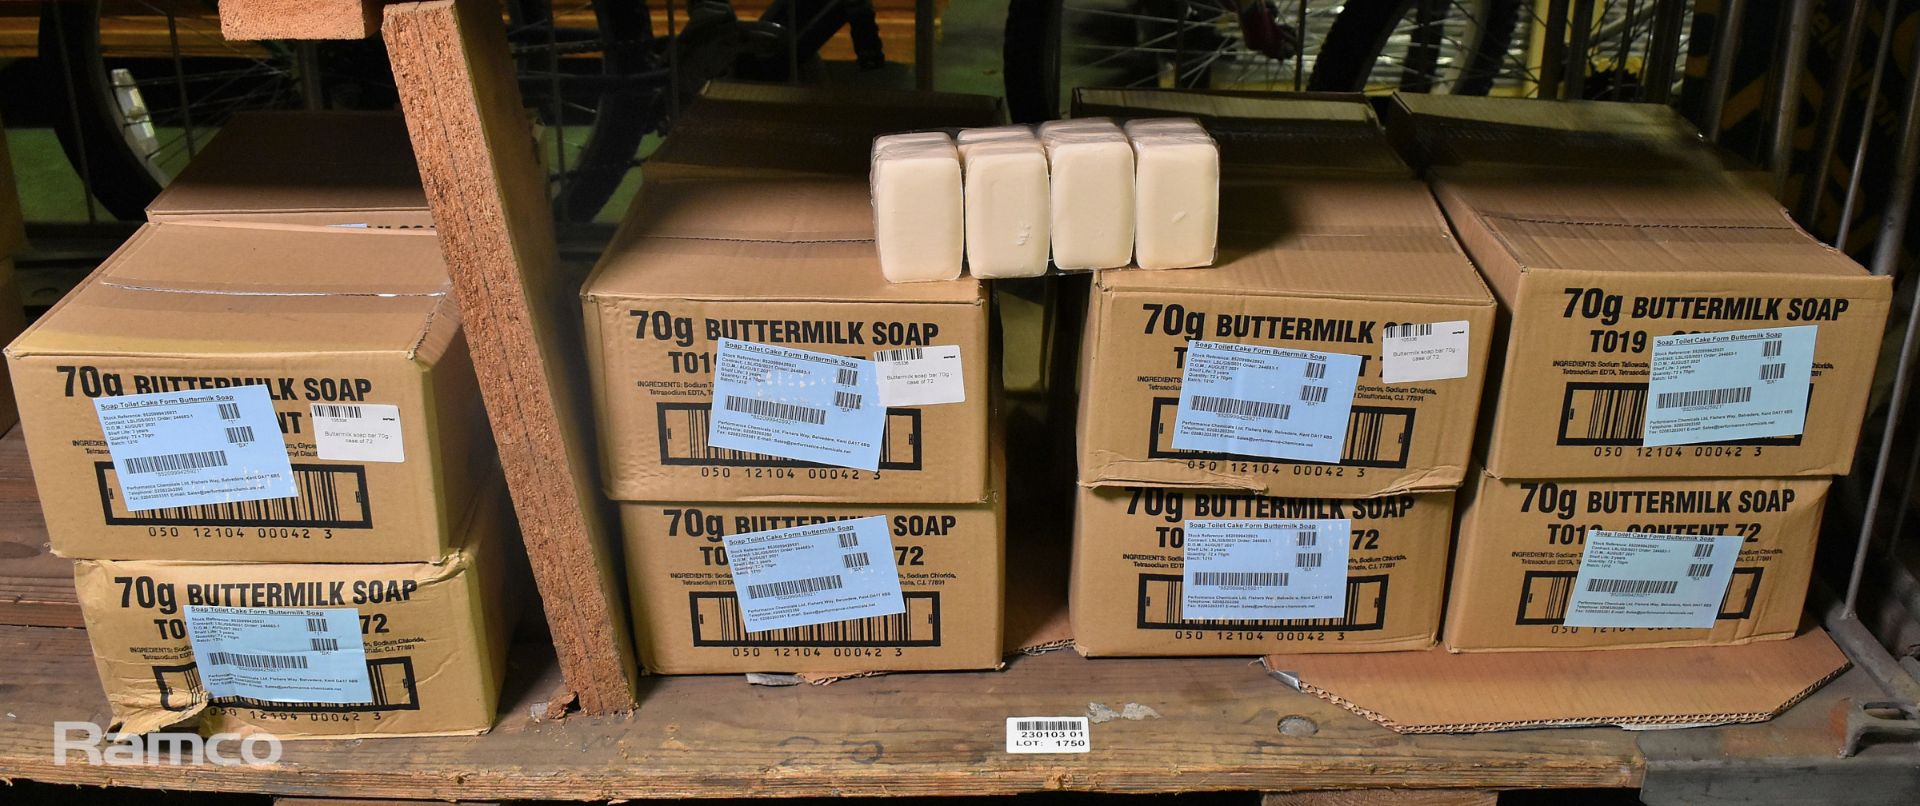 16x boxes of Buttermilk soap bar 70g - 72 units per box